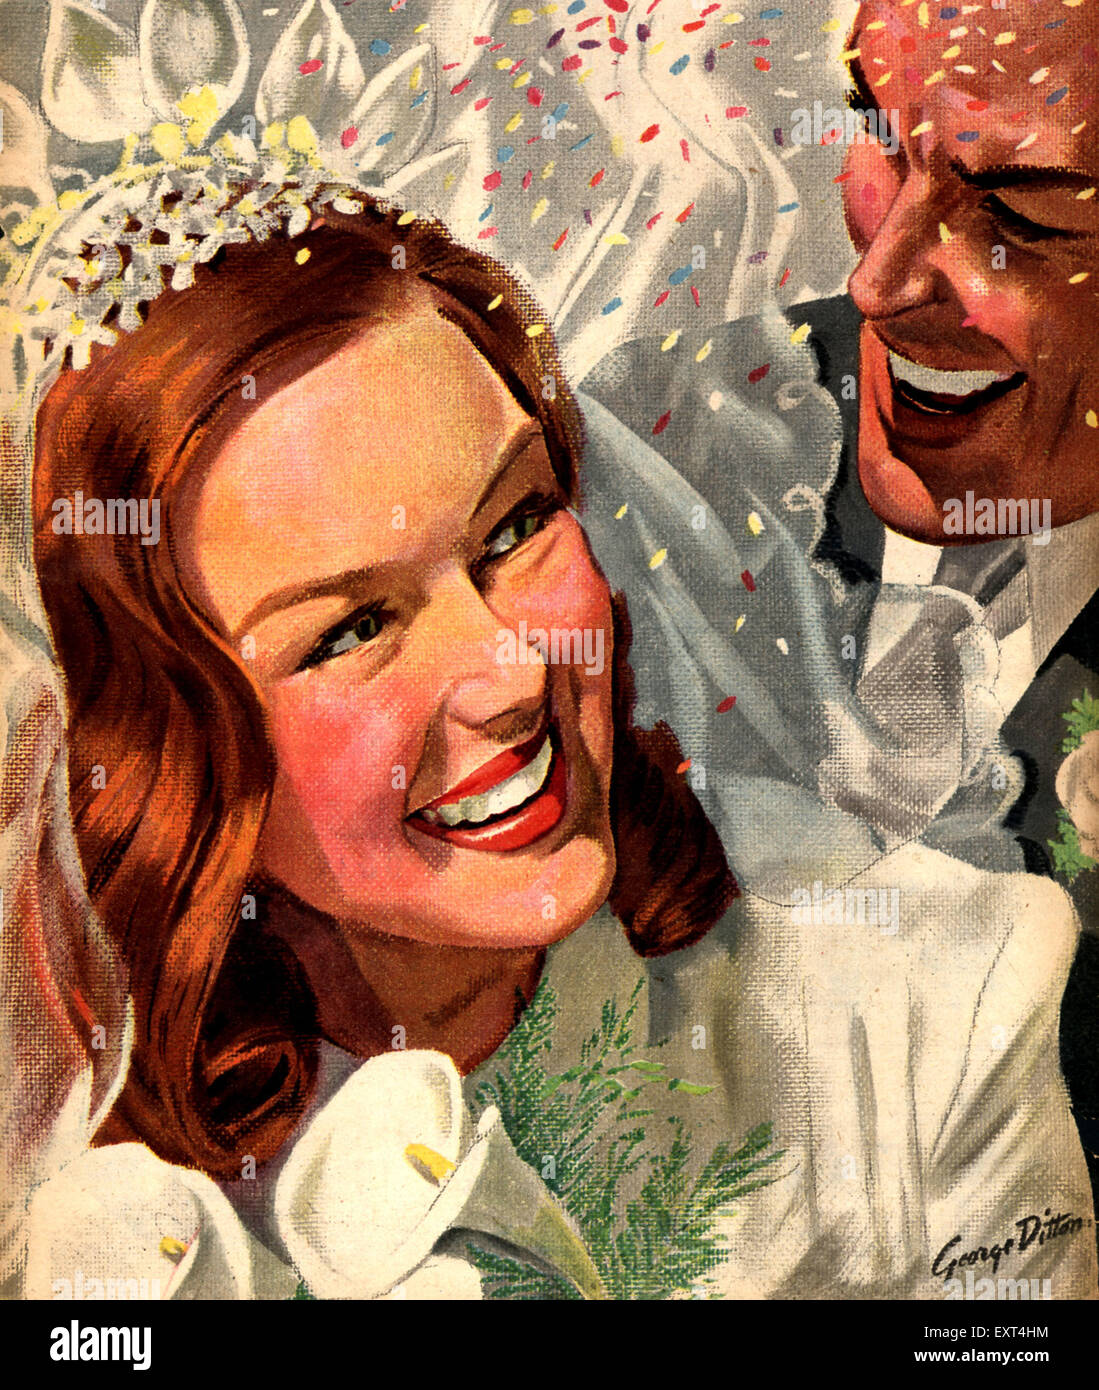 1940s UK Woman Wedding Magazine Cover Stock Photo